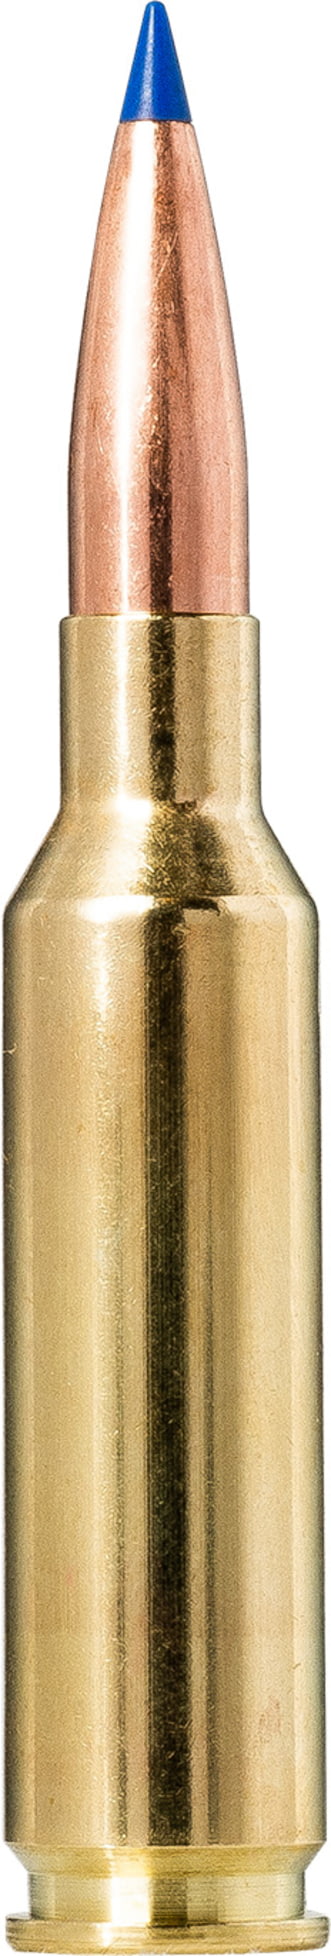 Norma Bondstrike 6.5mm Creedmoor 143 Grain Norma Bondstrike Brass Cased Centerfire Rifle Ammunition